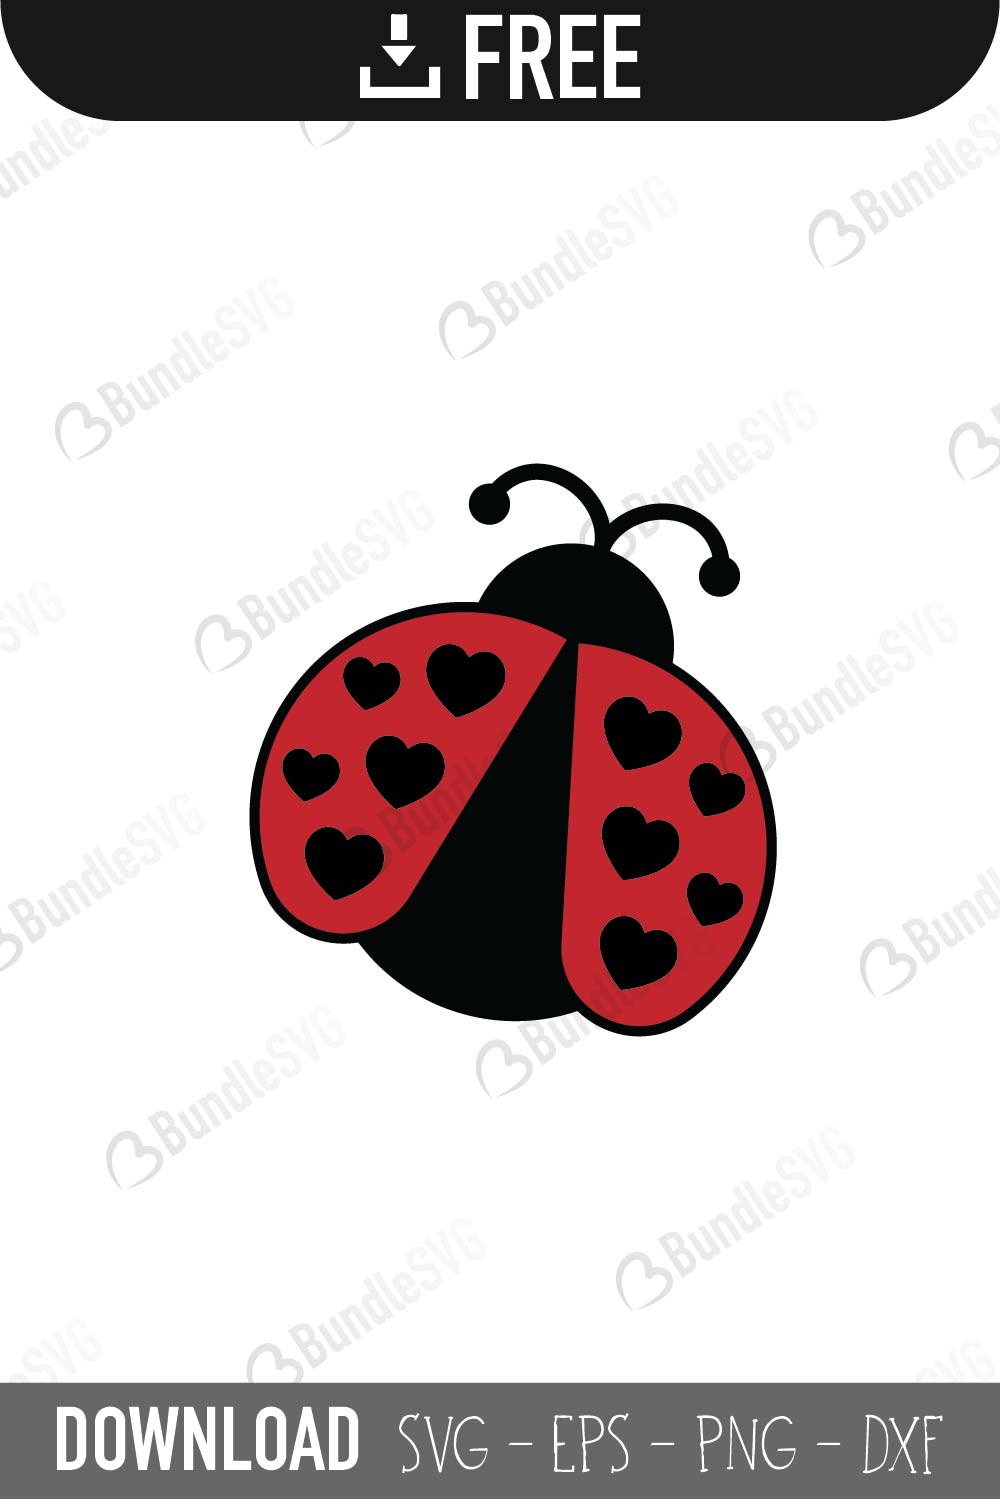 Download Ladybug SVG Free Download | BundleSVG